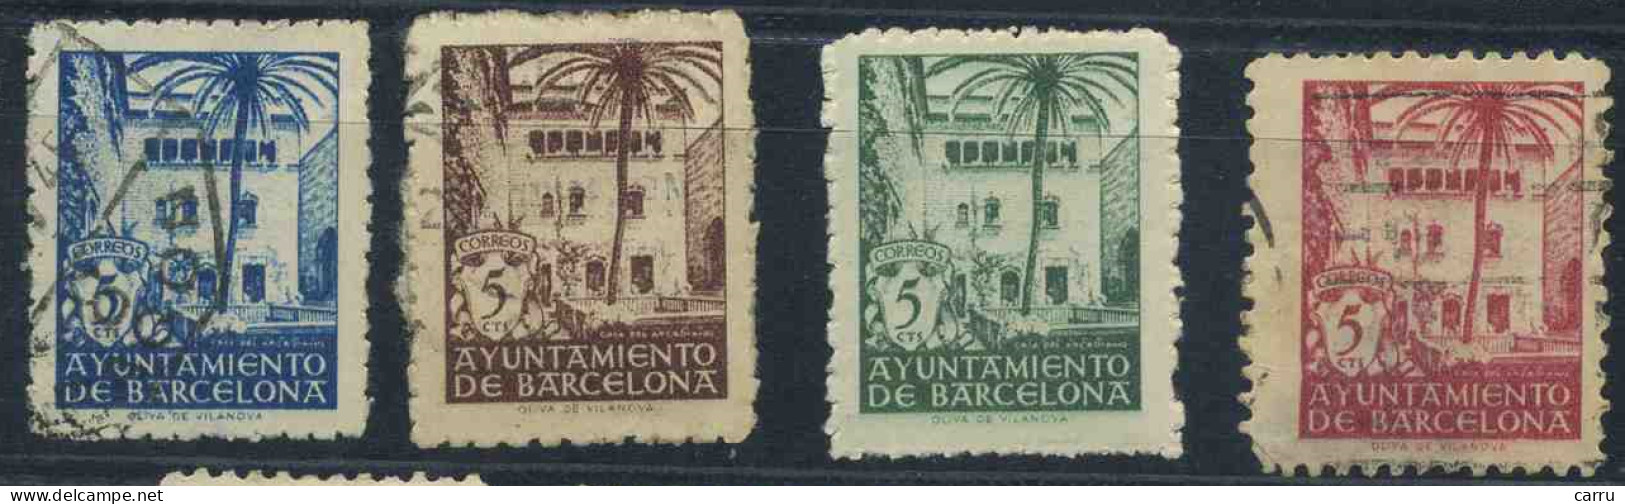 España - Barcelona - 1945 - Barcelona